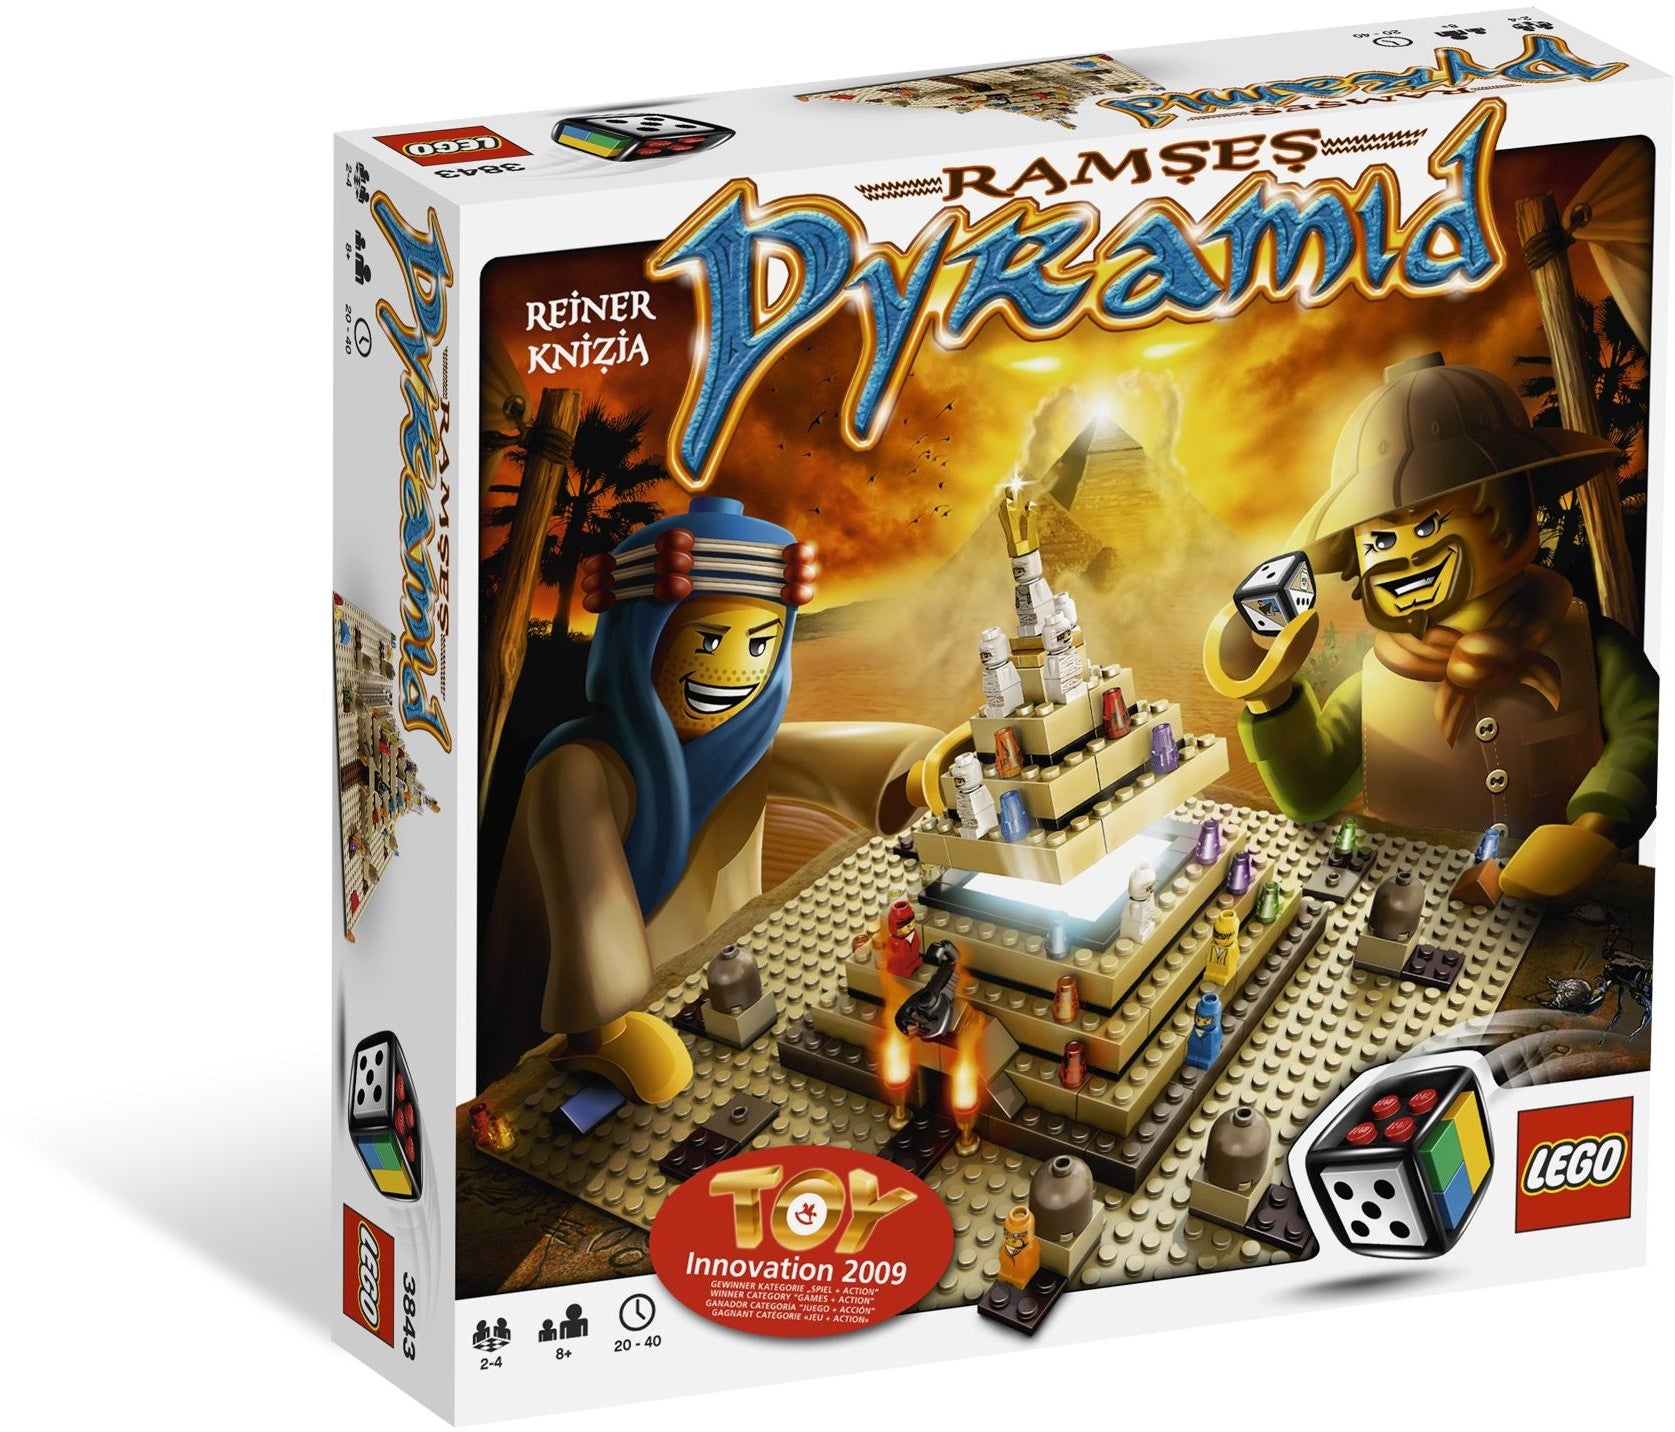 Lego Games 3843 - Ramses Pyramid